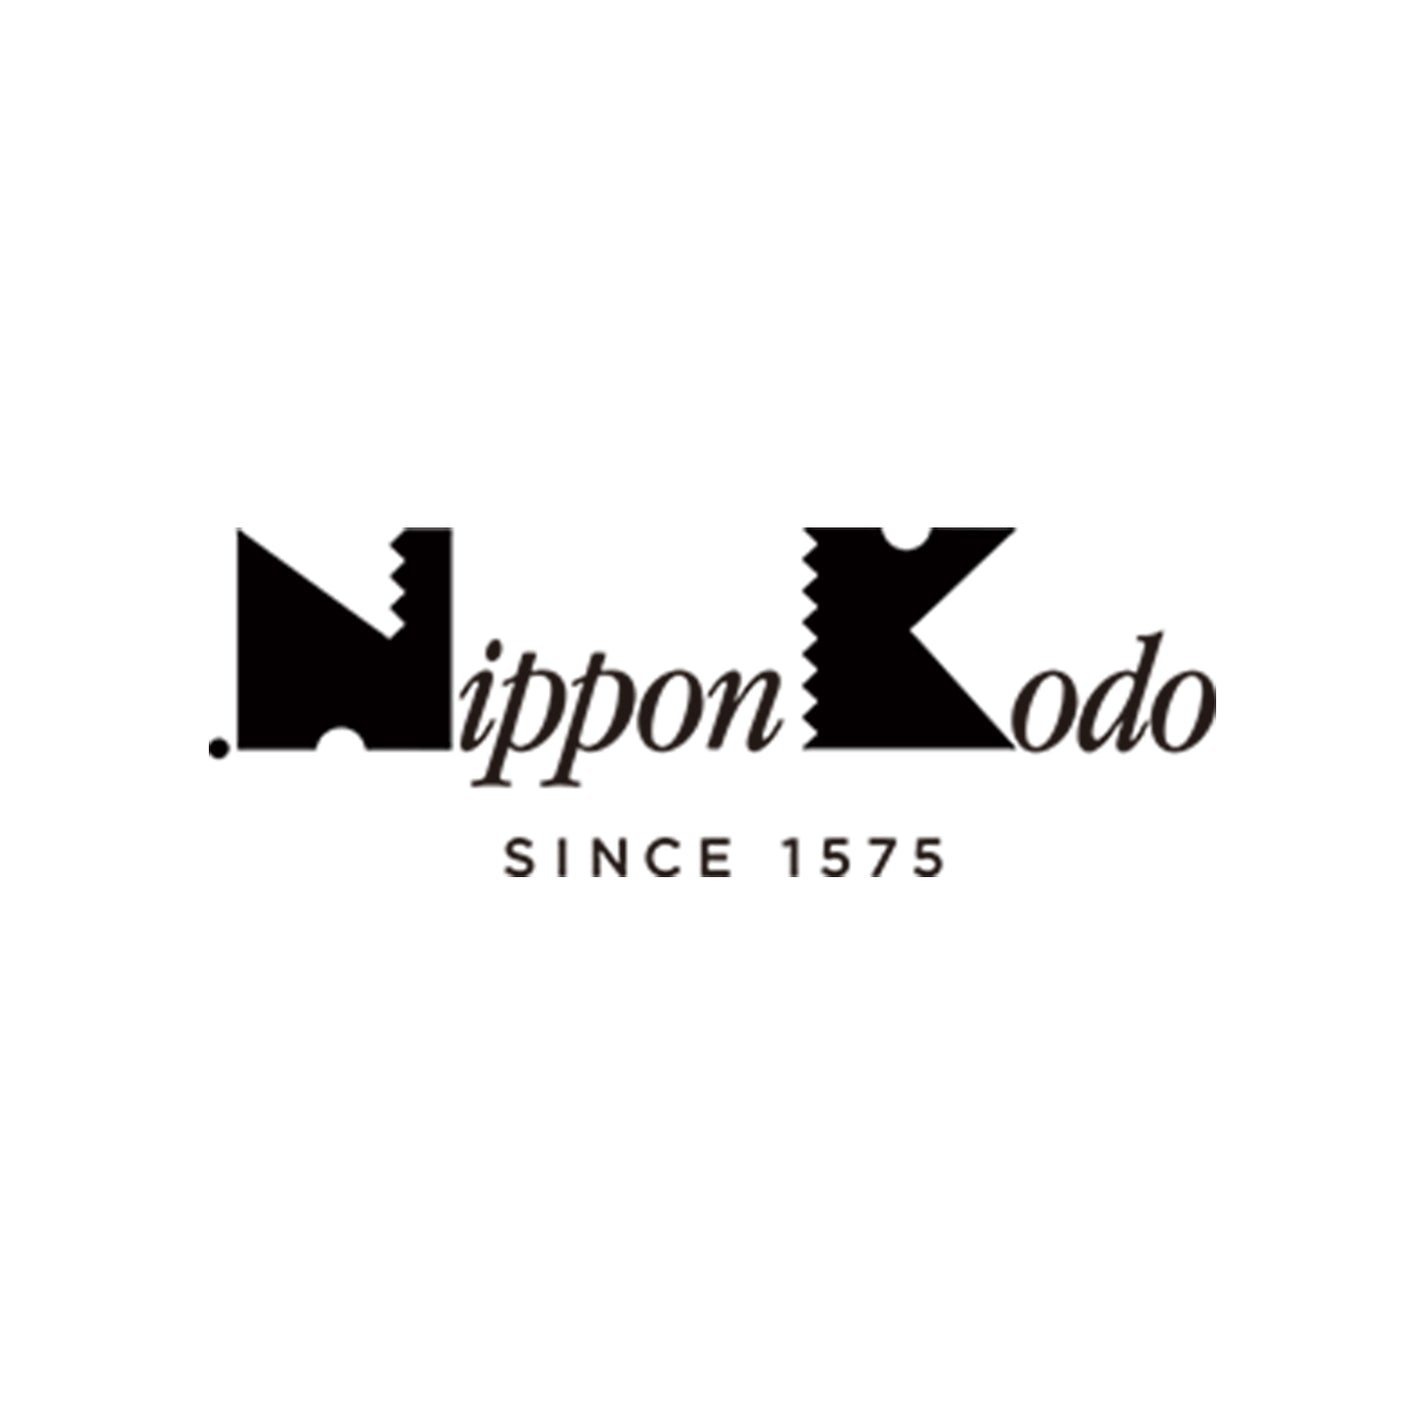 Nippon Kodo Herb & Earth Incense - White Sage No.08